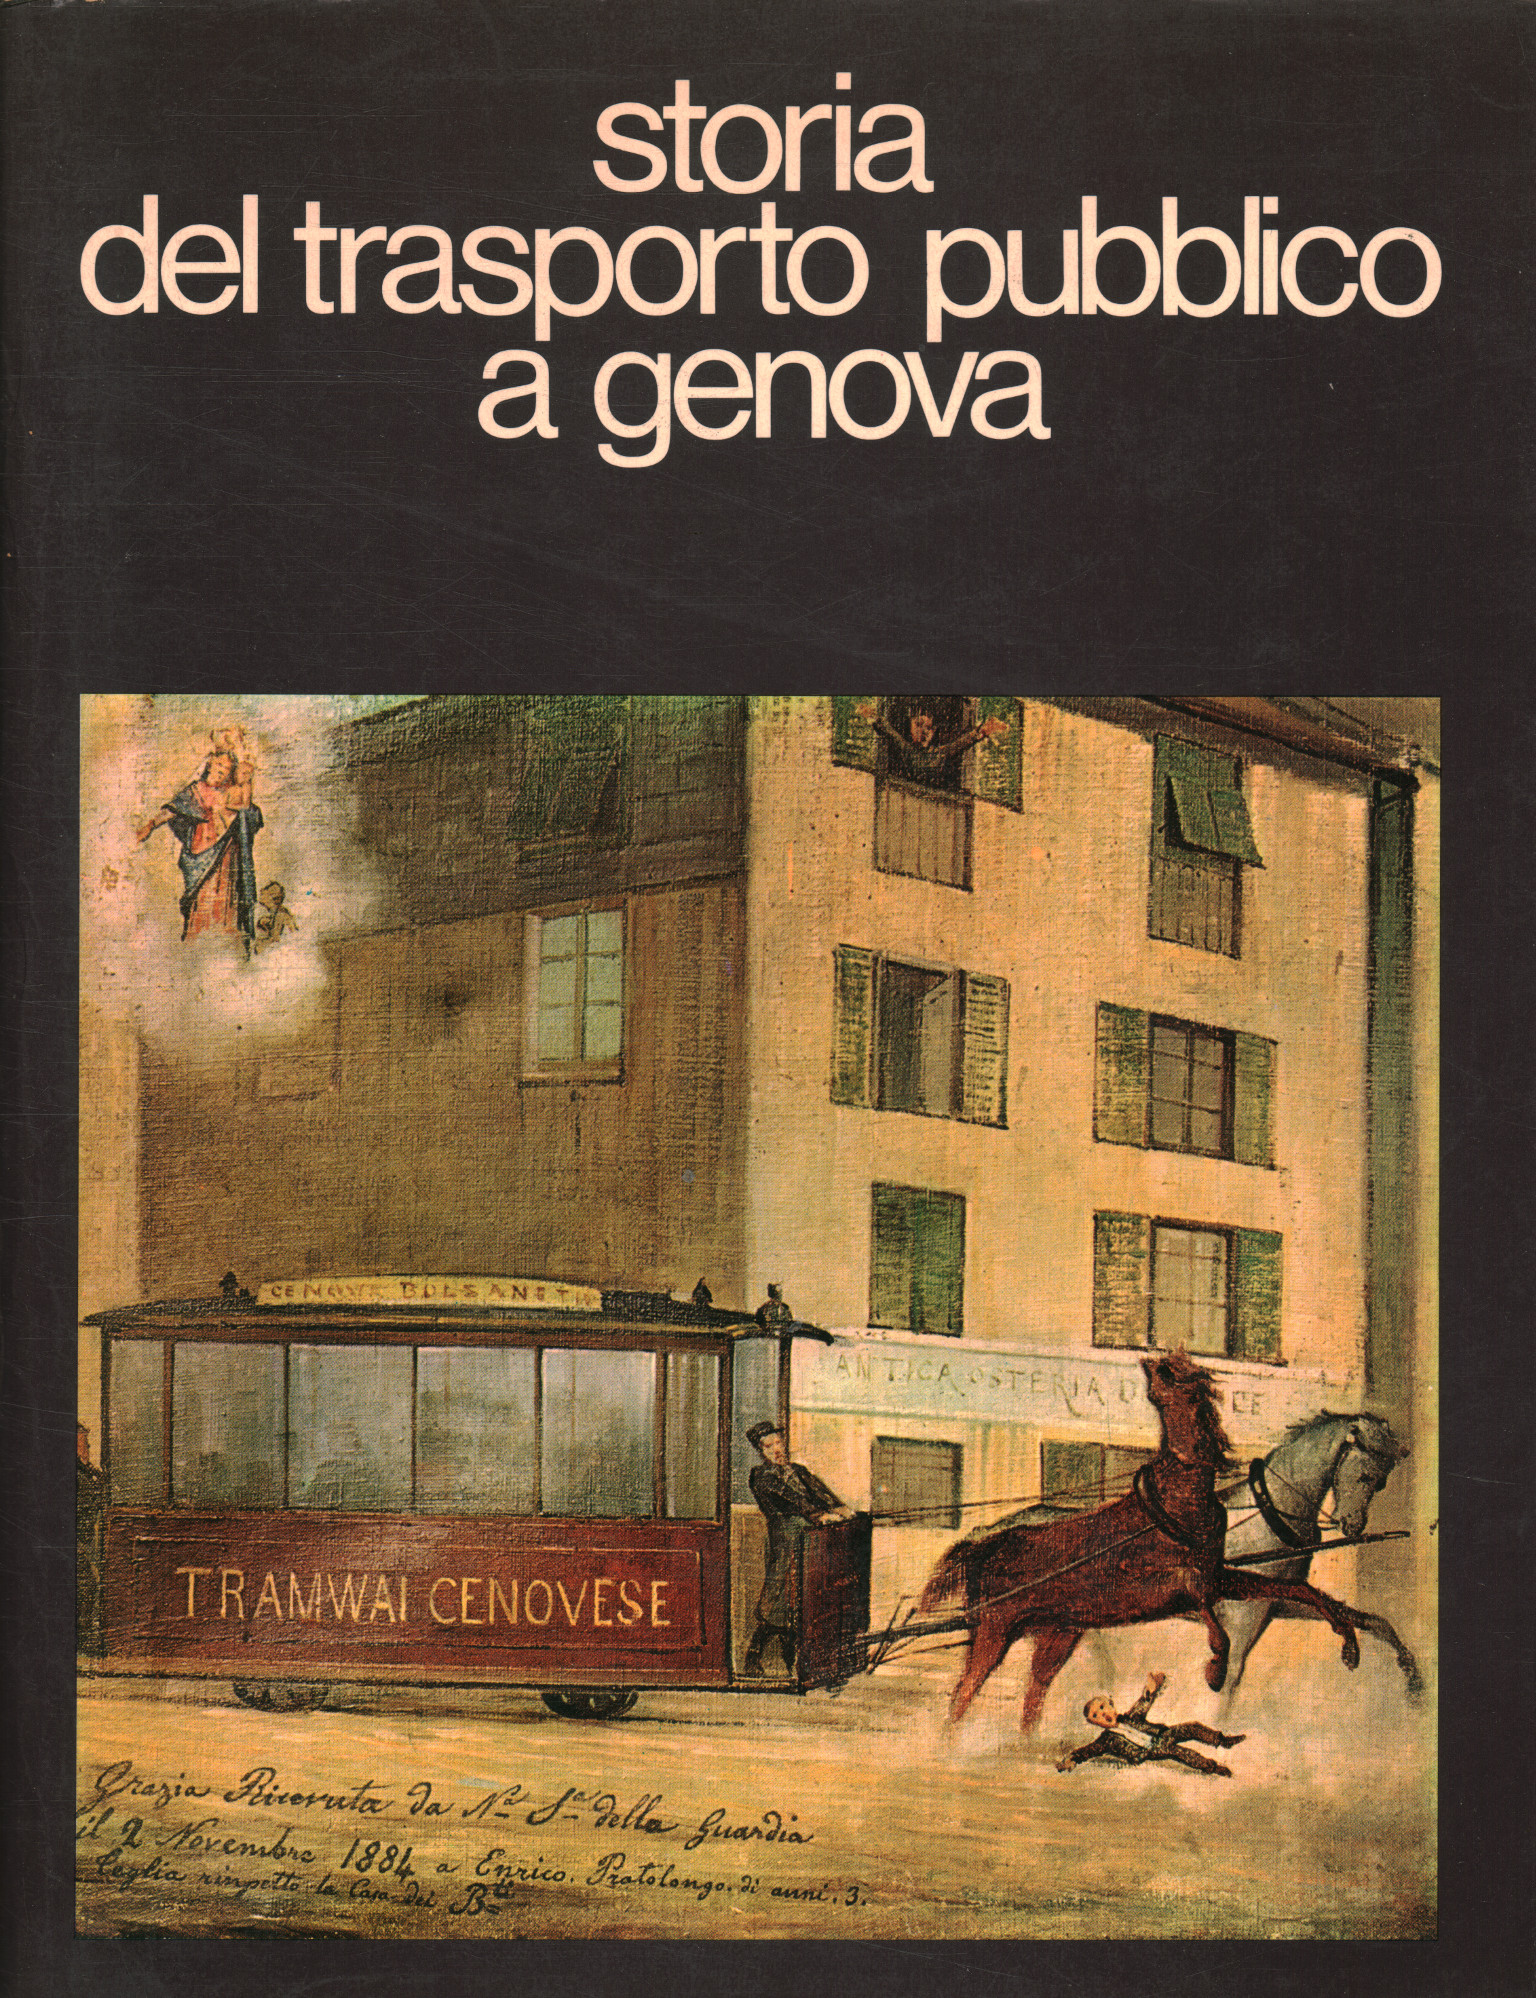 History of public transport in Genoa